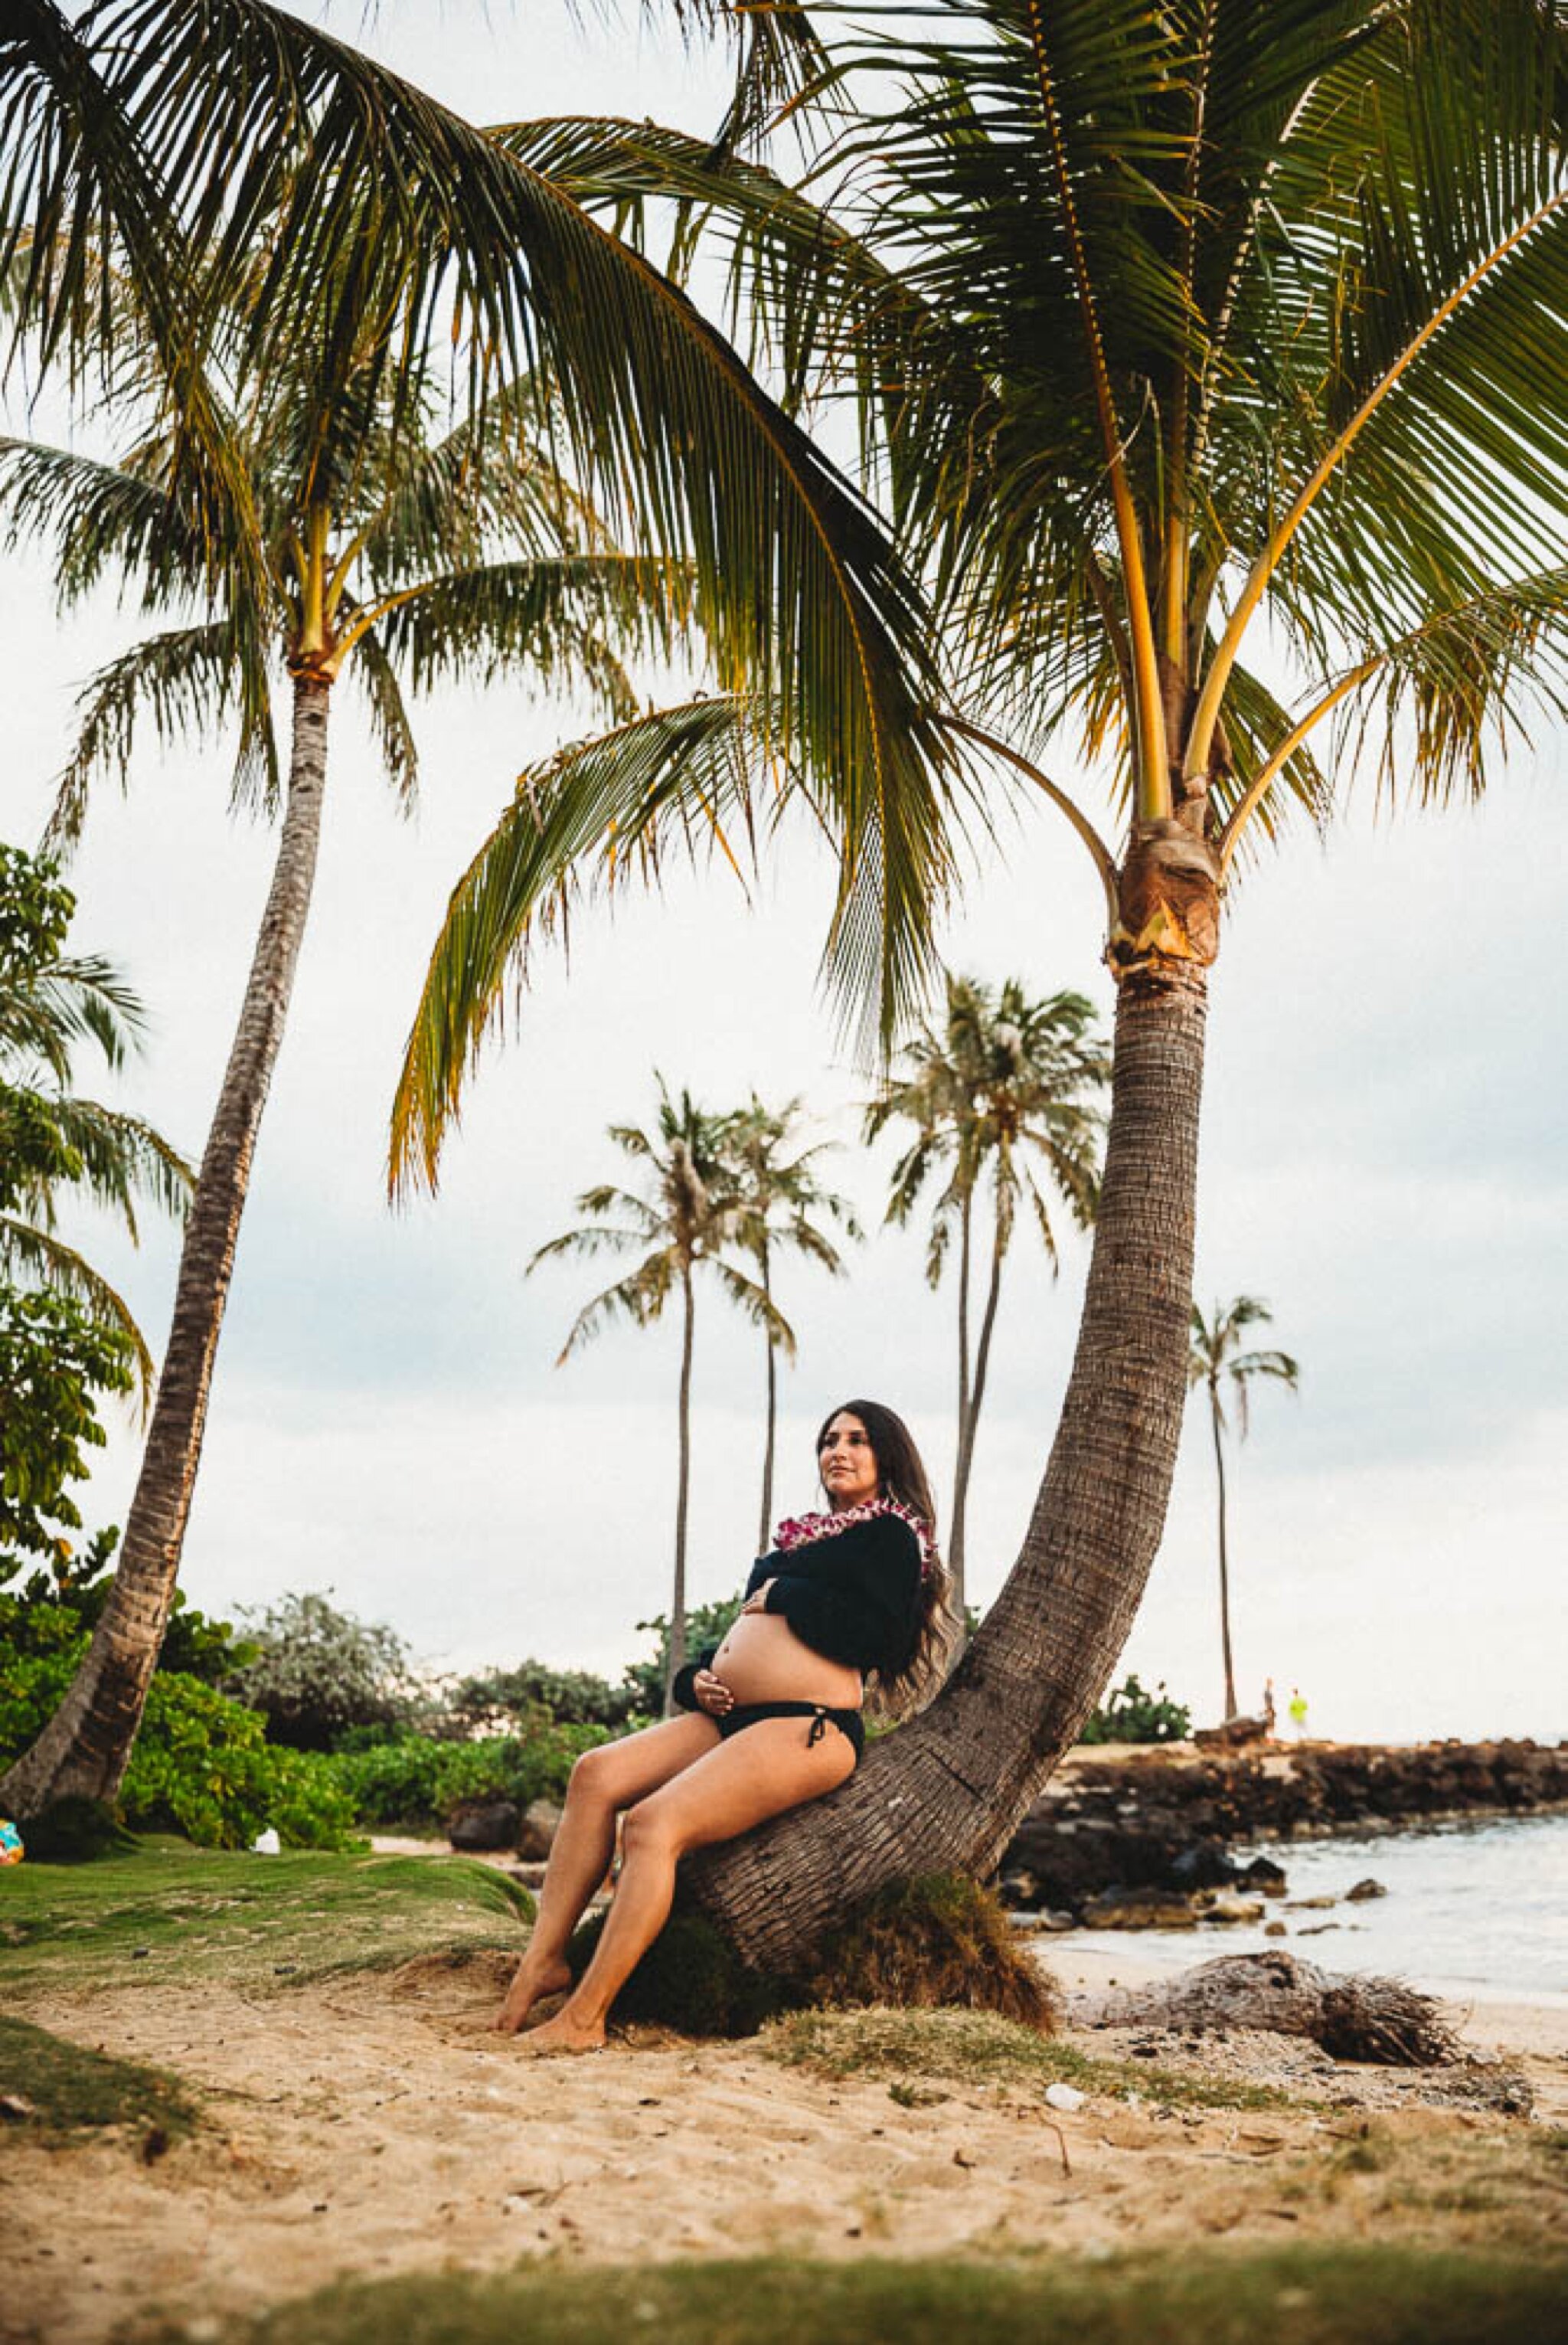 Sunset Maternity Photography Session at Kahala Beach in Oahu - Hawaii Family Photographer - Johanna Dye 19.jpg